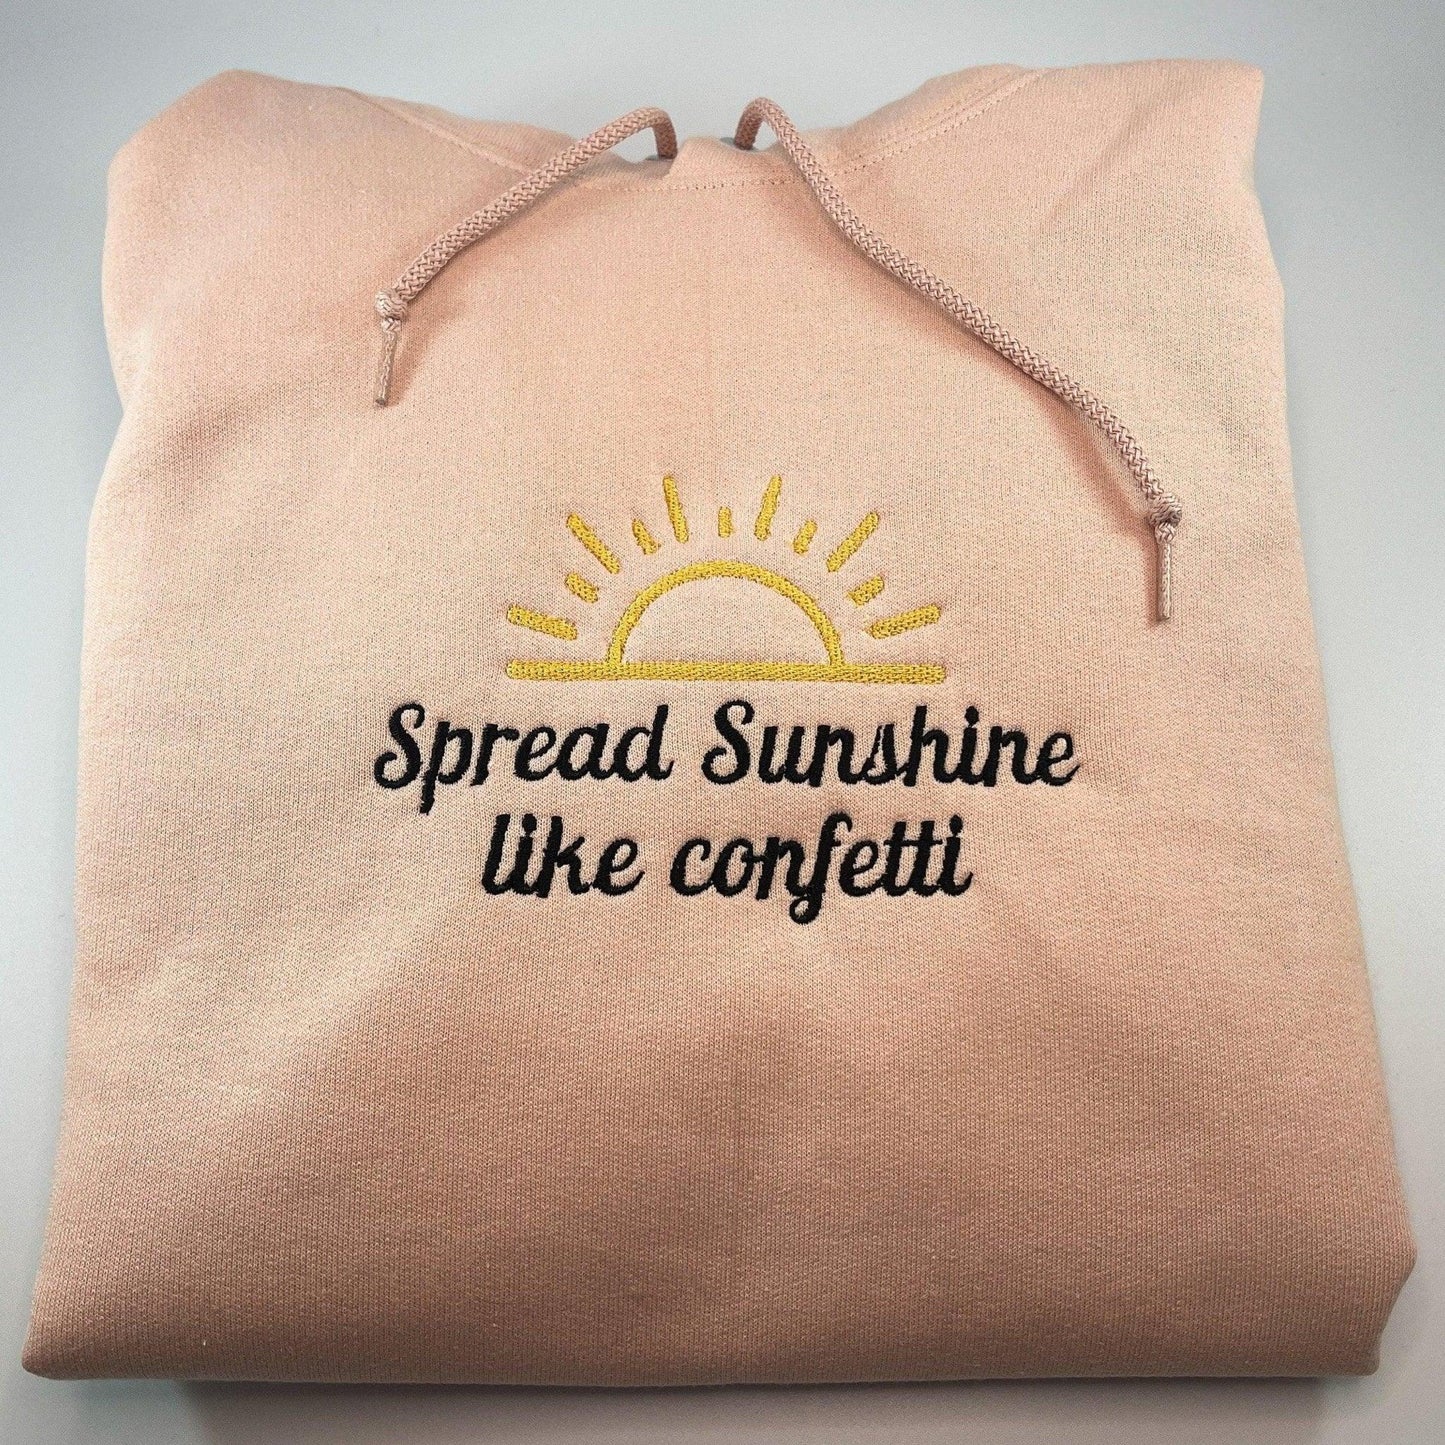 Spread Sunshine Like Confetti Embroidered Hoodie - Sunshine Soul MD